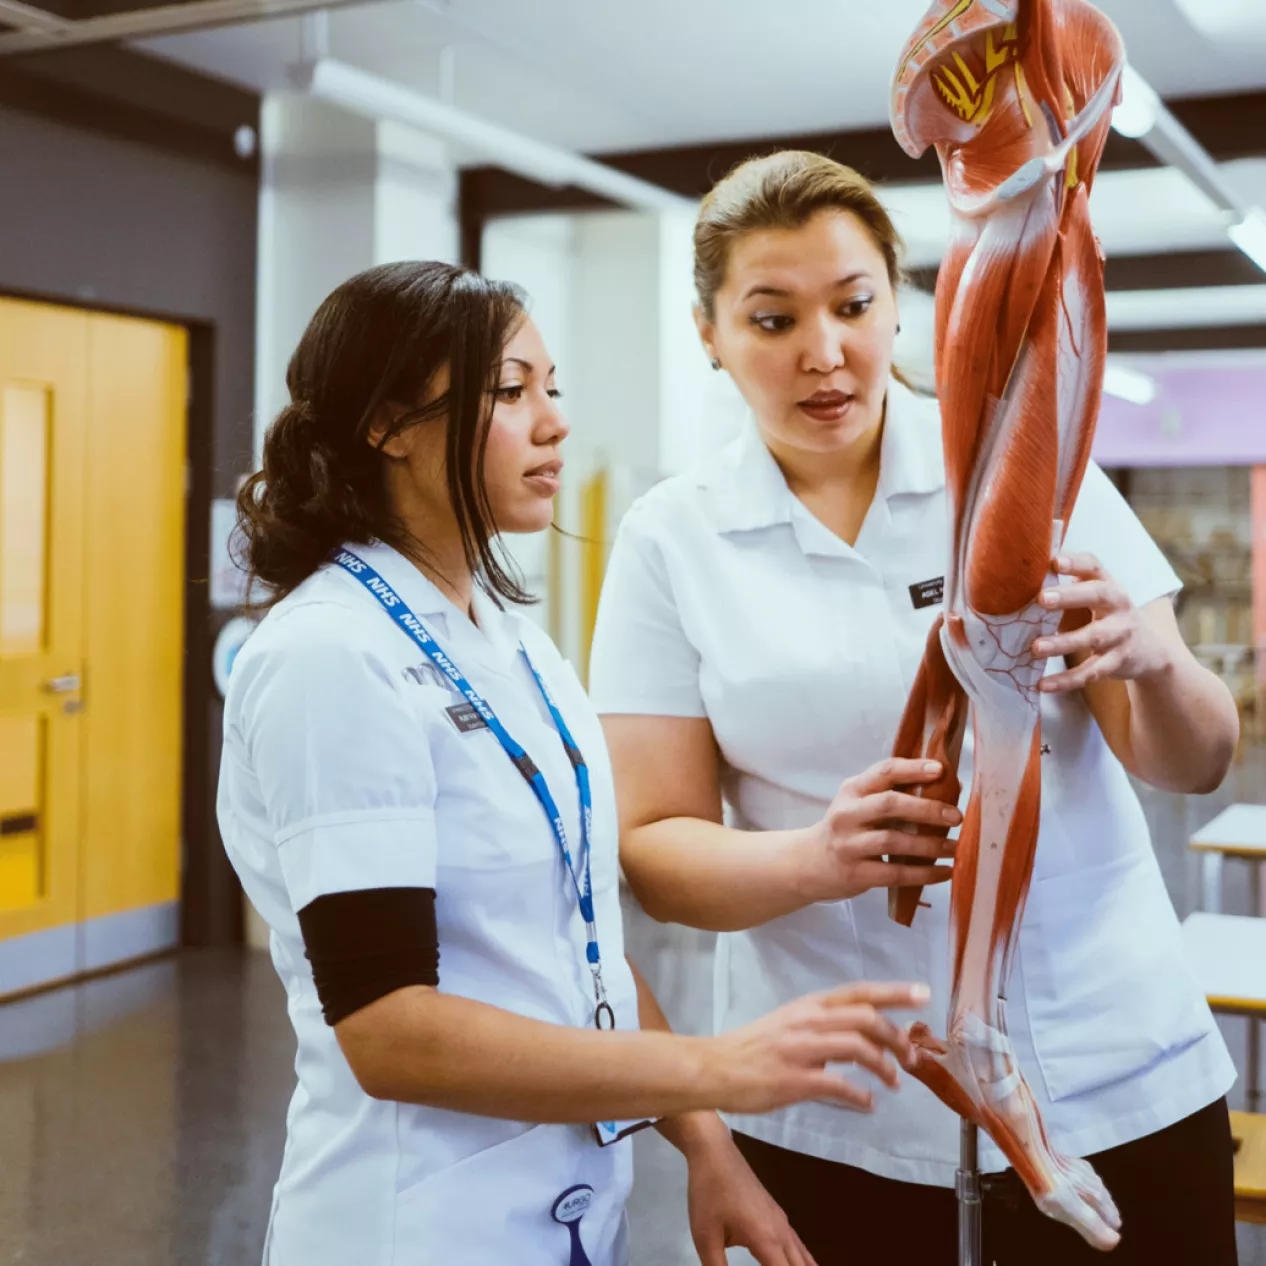 Two podiatry students examining a plastic leg